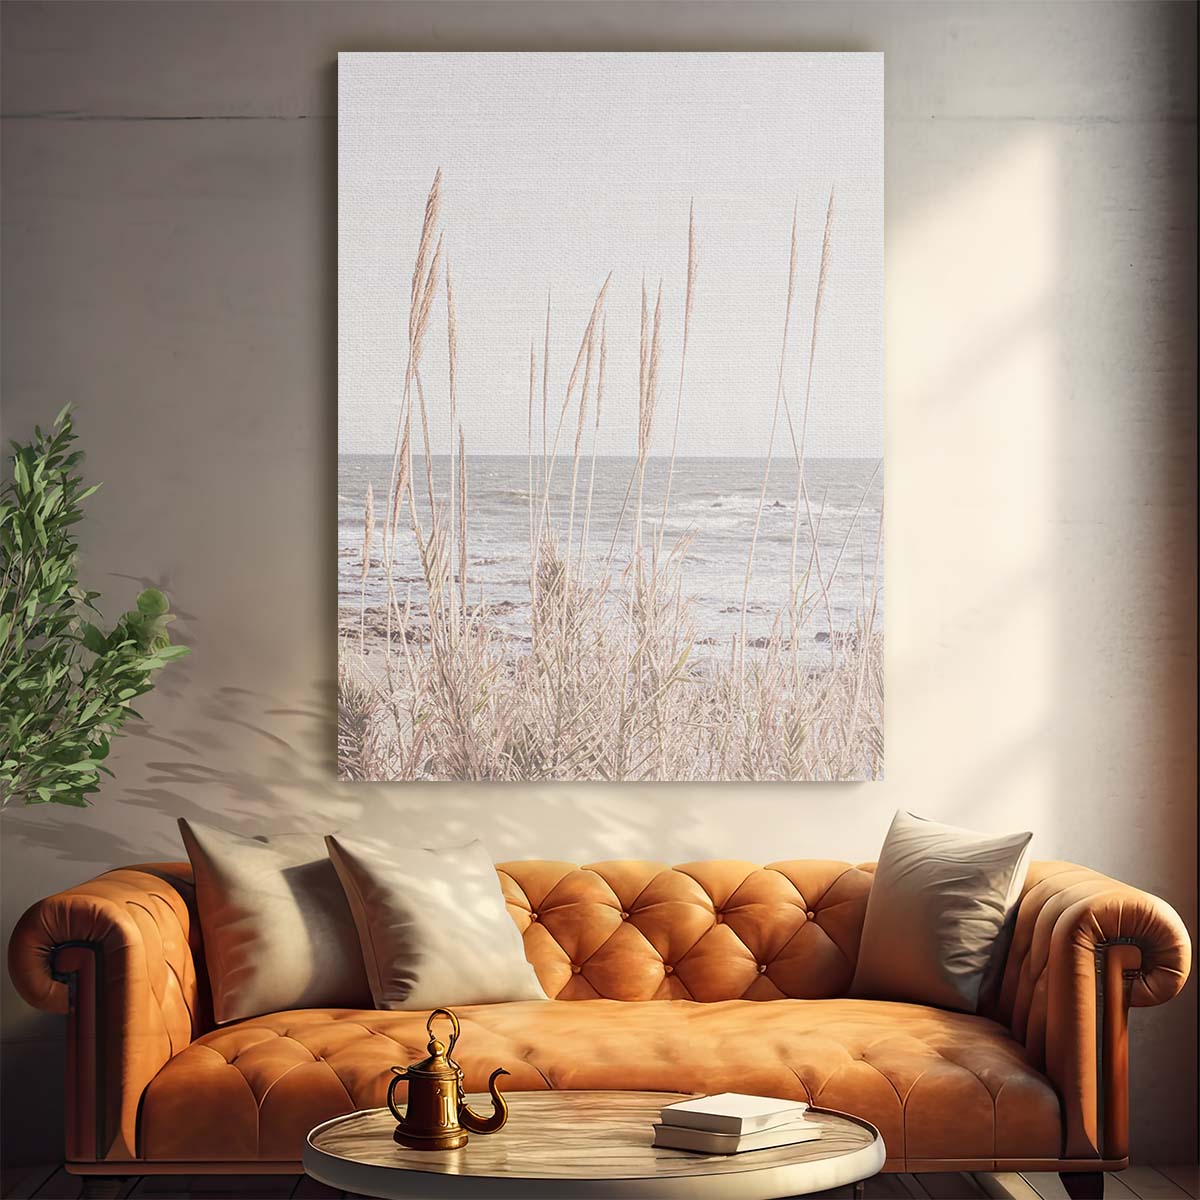 Coastal Landscape Photography Beige Beach, Ocean Horizon, Grass Reeds by Luxuriance Designs, made in USA